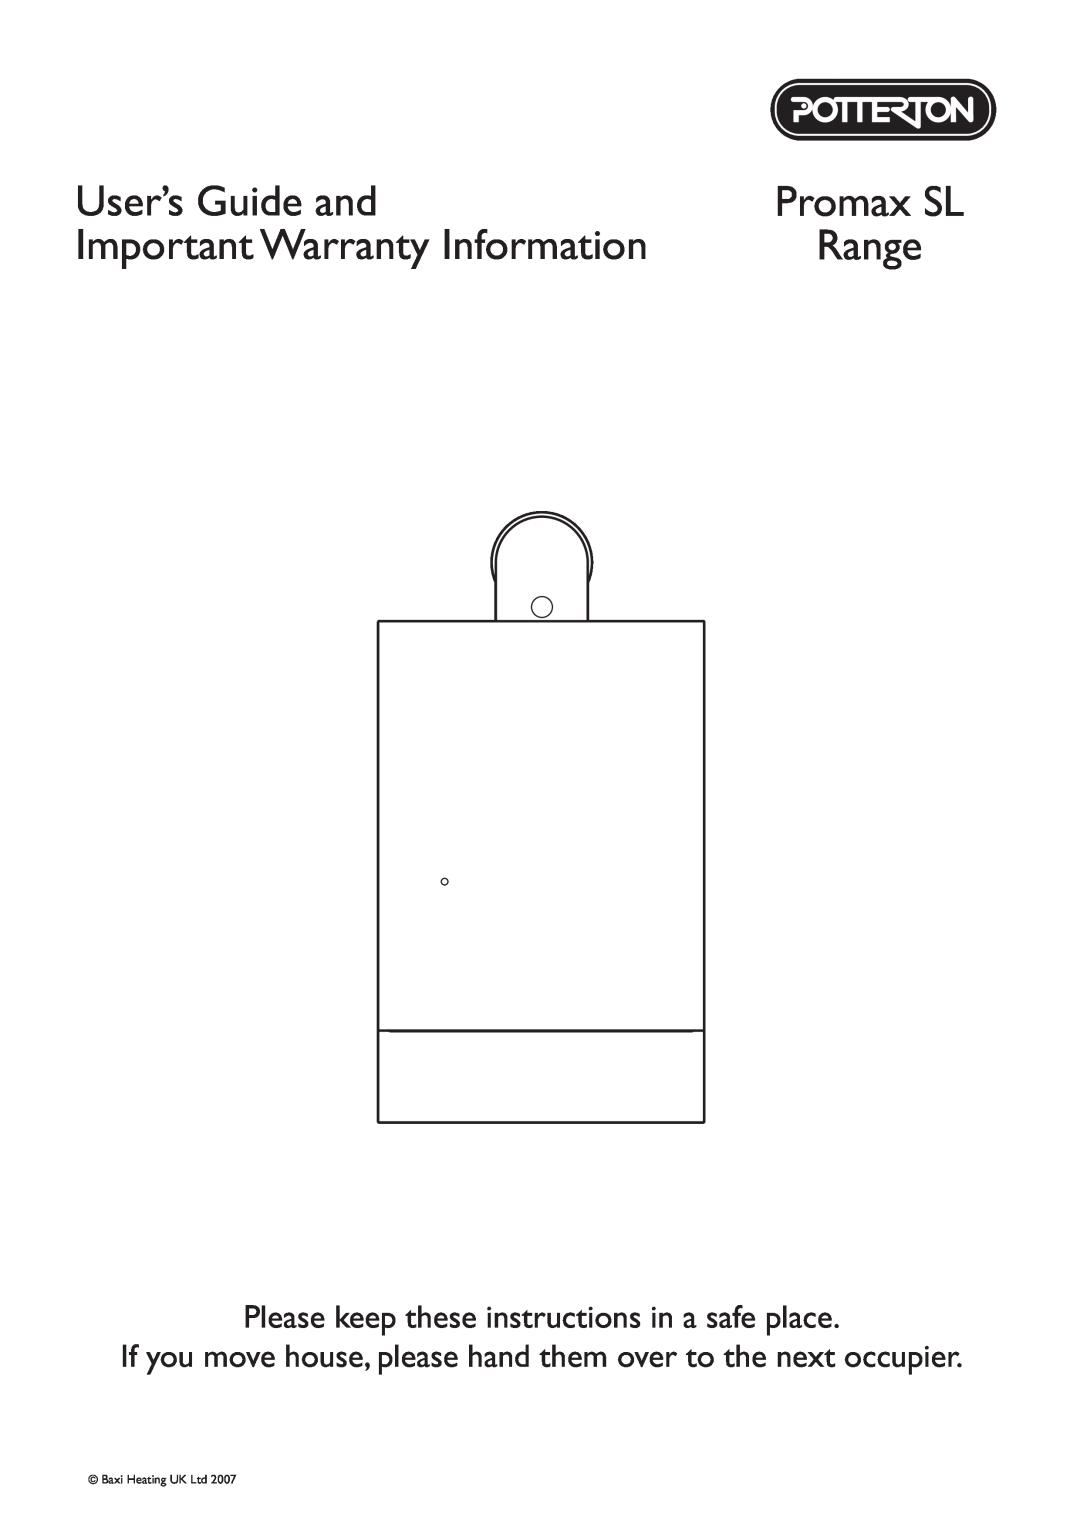 Baxi Potterton Promax SL warranty User’s Guide and, Important Warranty Information, Range 